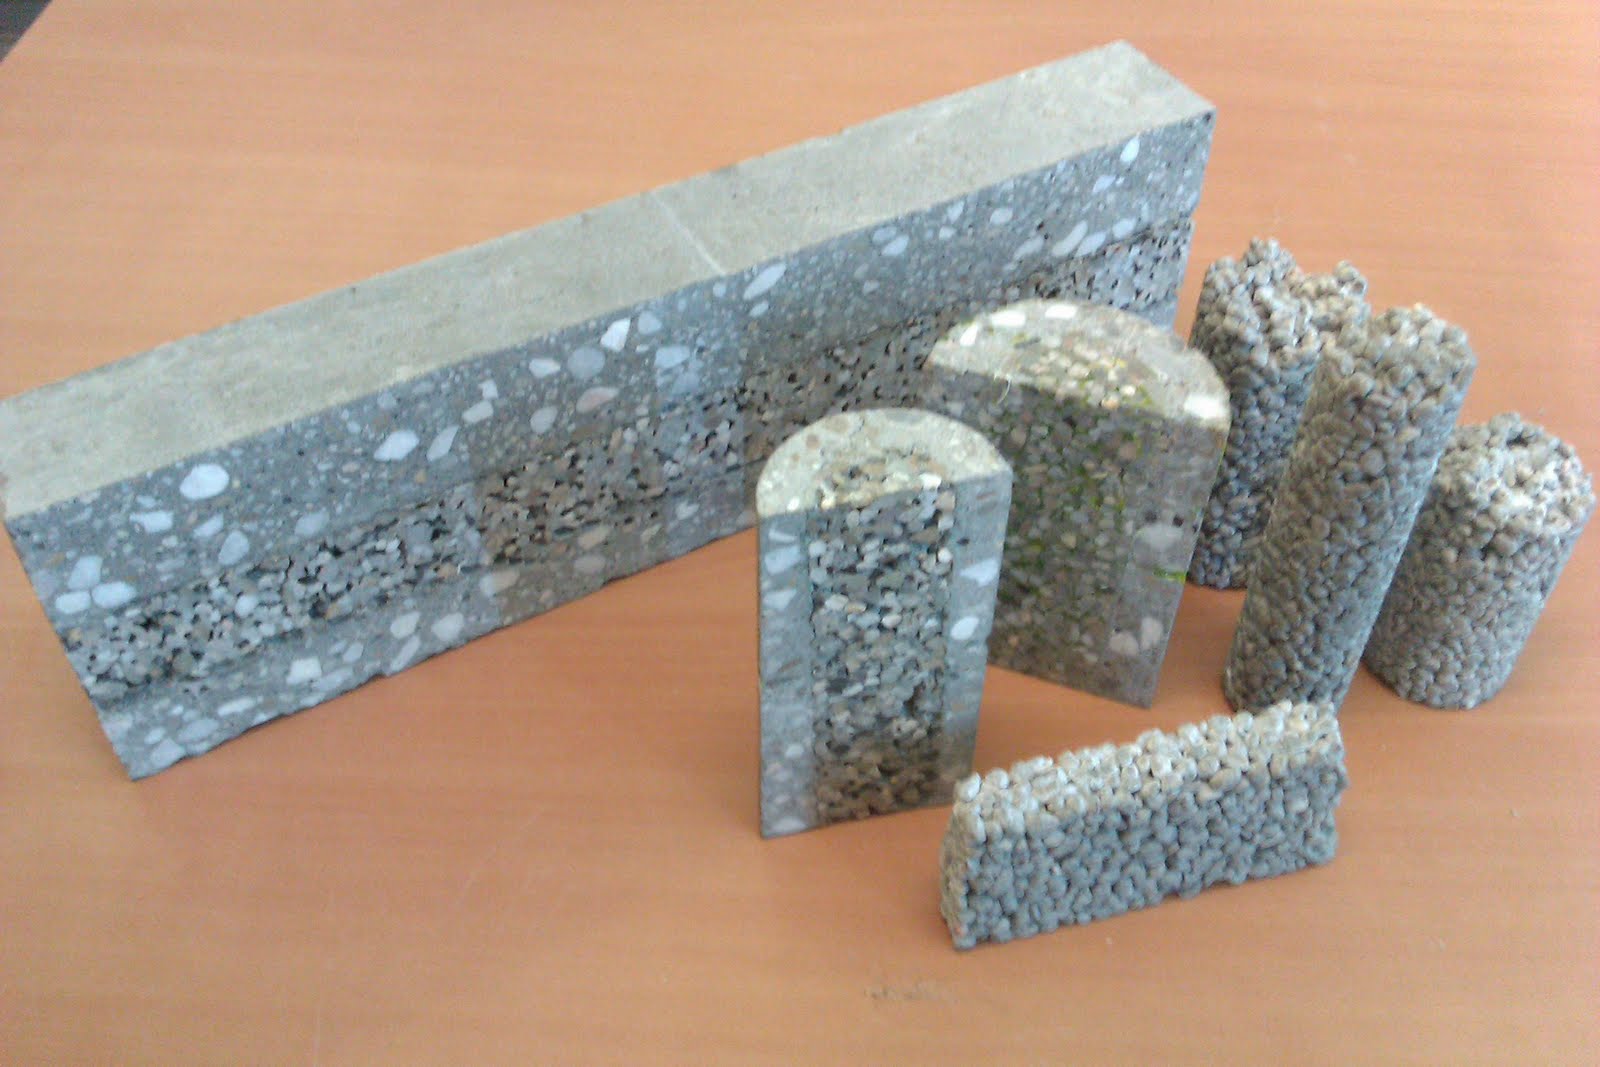 Self Healing Concrete: more specimen shapes